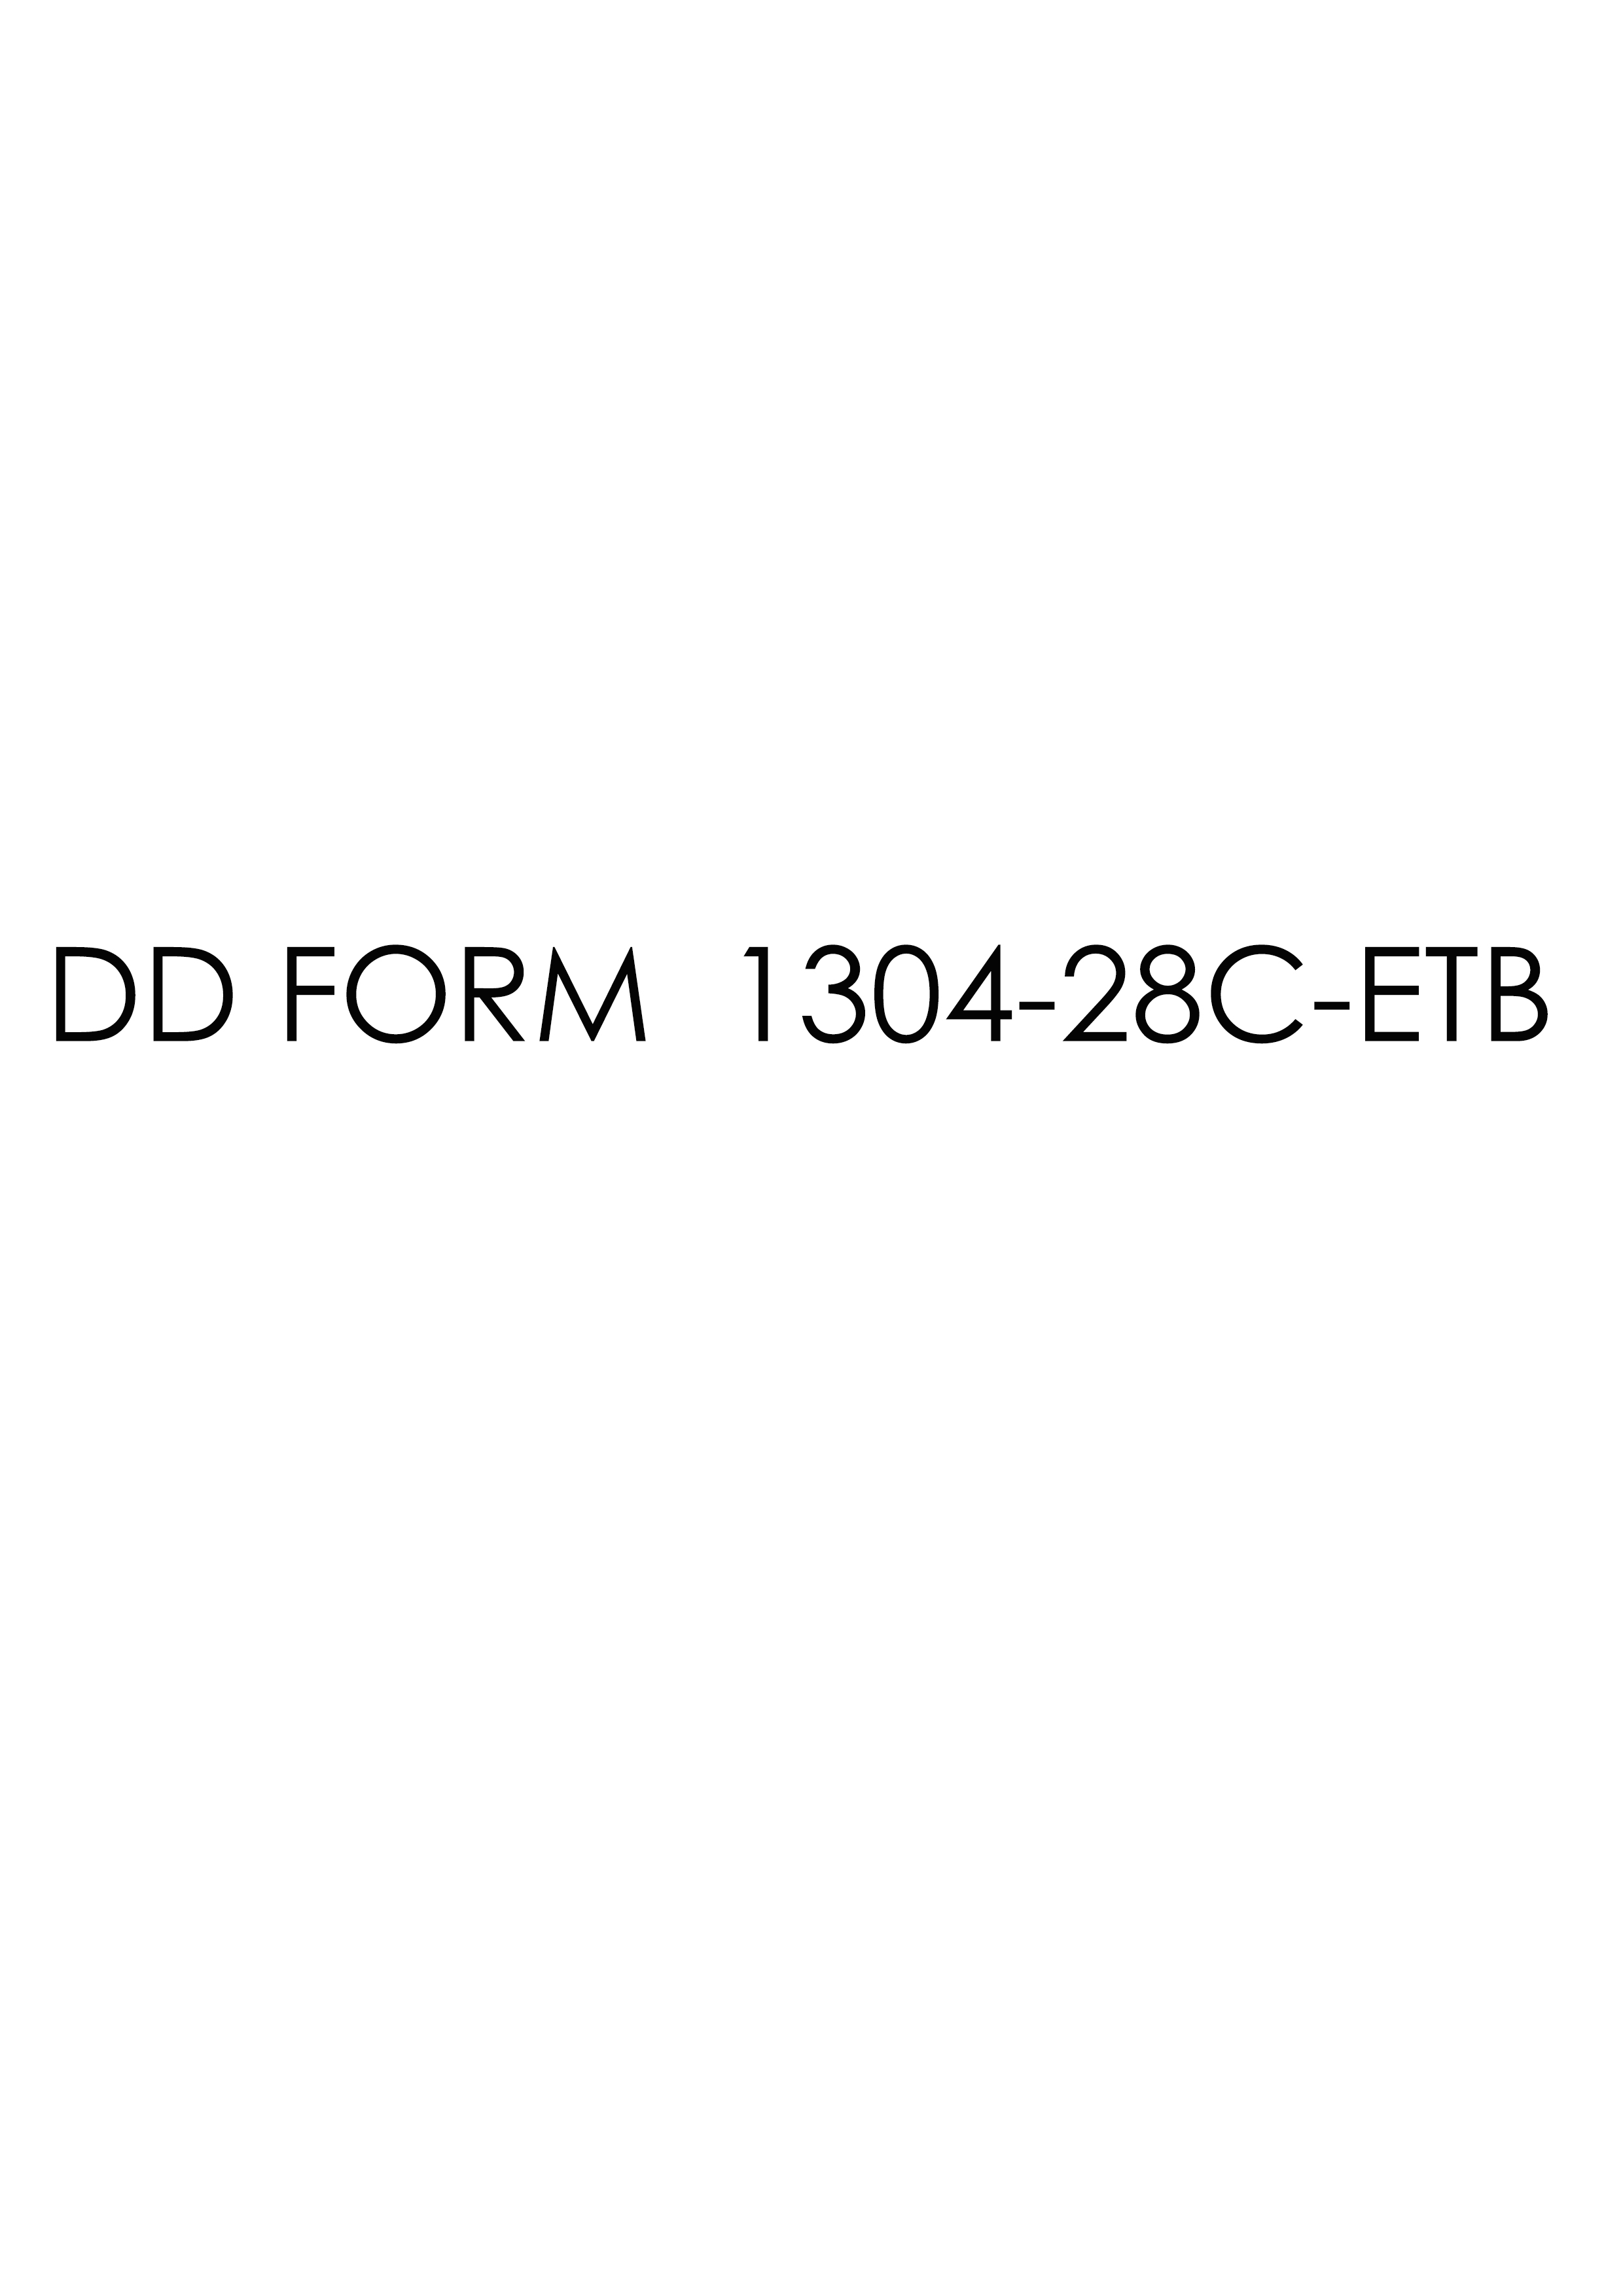 Download Fillable dd Form 1304-28C-ETB